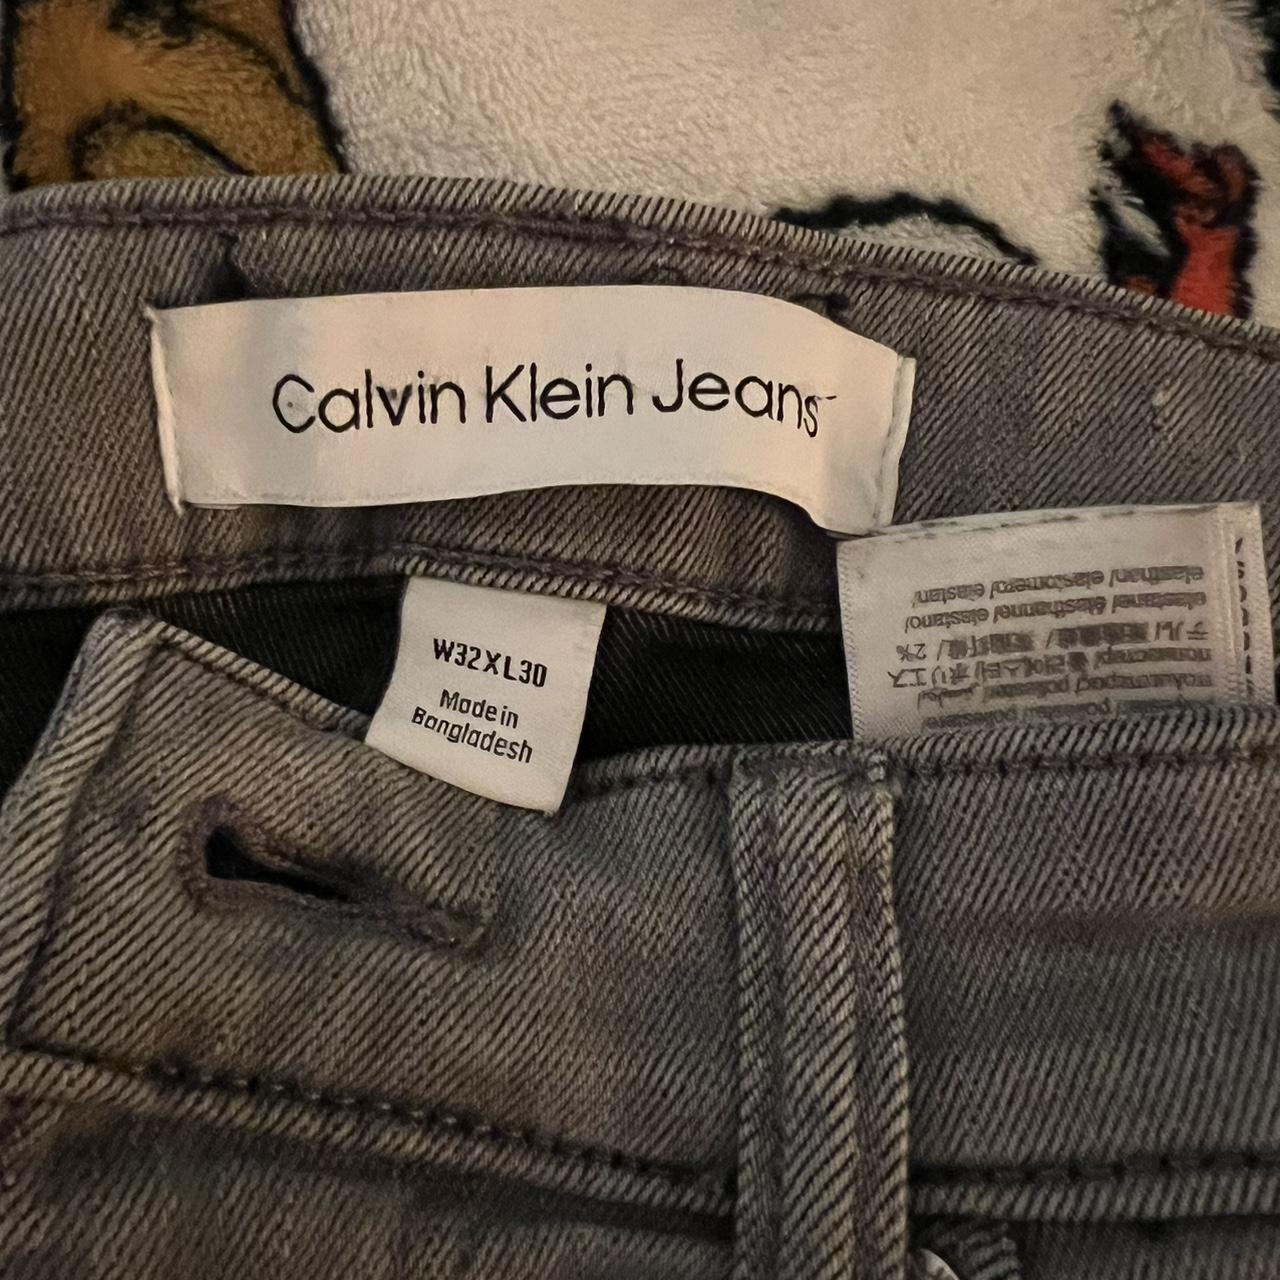 Calvin Klein Grey Jeans Size 32x30 No Flaws - Depop